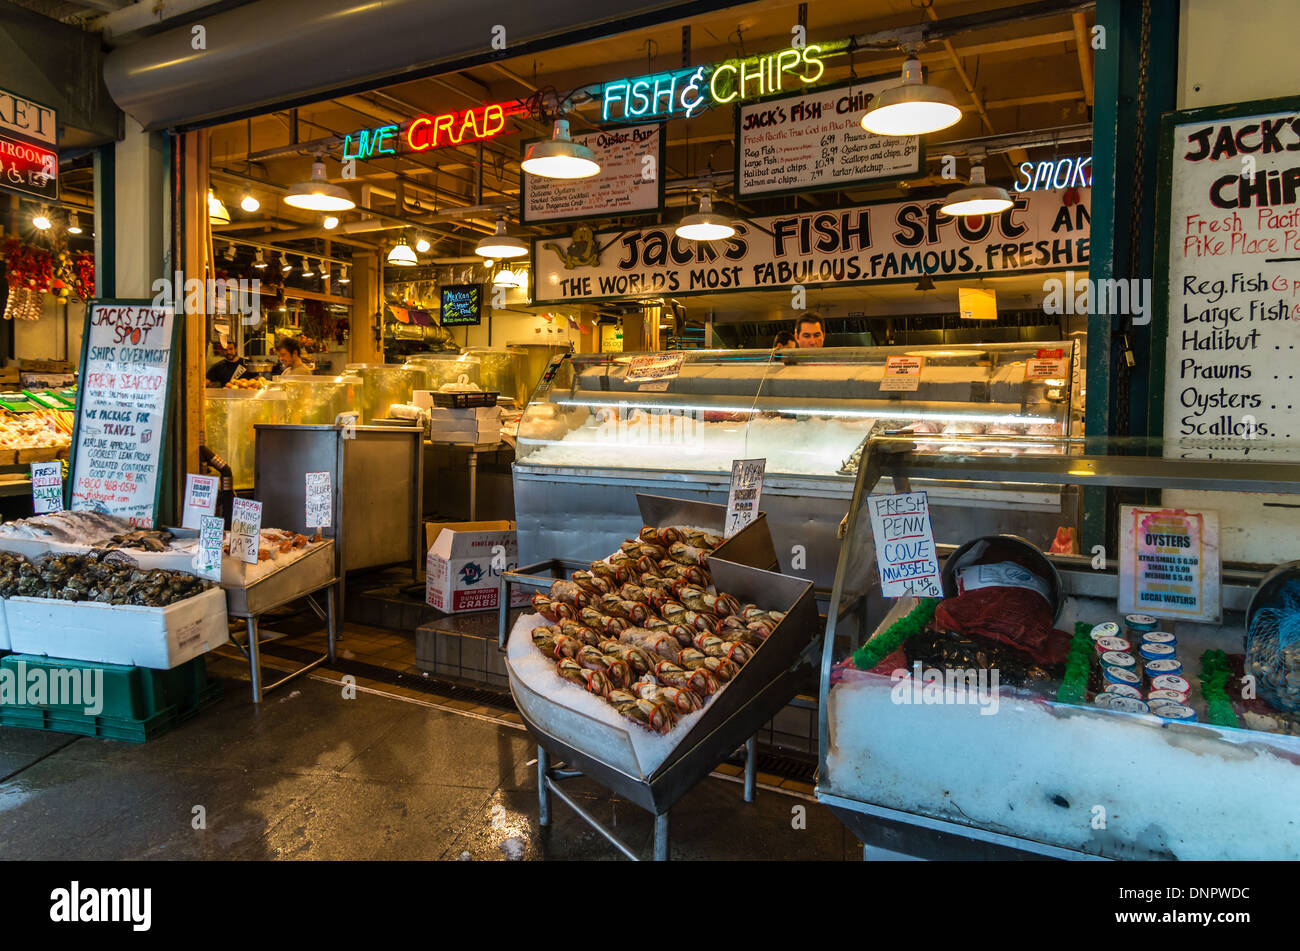 Jack's Fish Spot market stall with iced displays Pike Place Market Seattle, Washington, USA Stock Photo